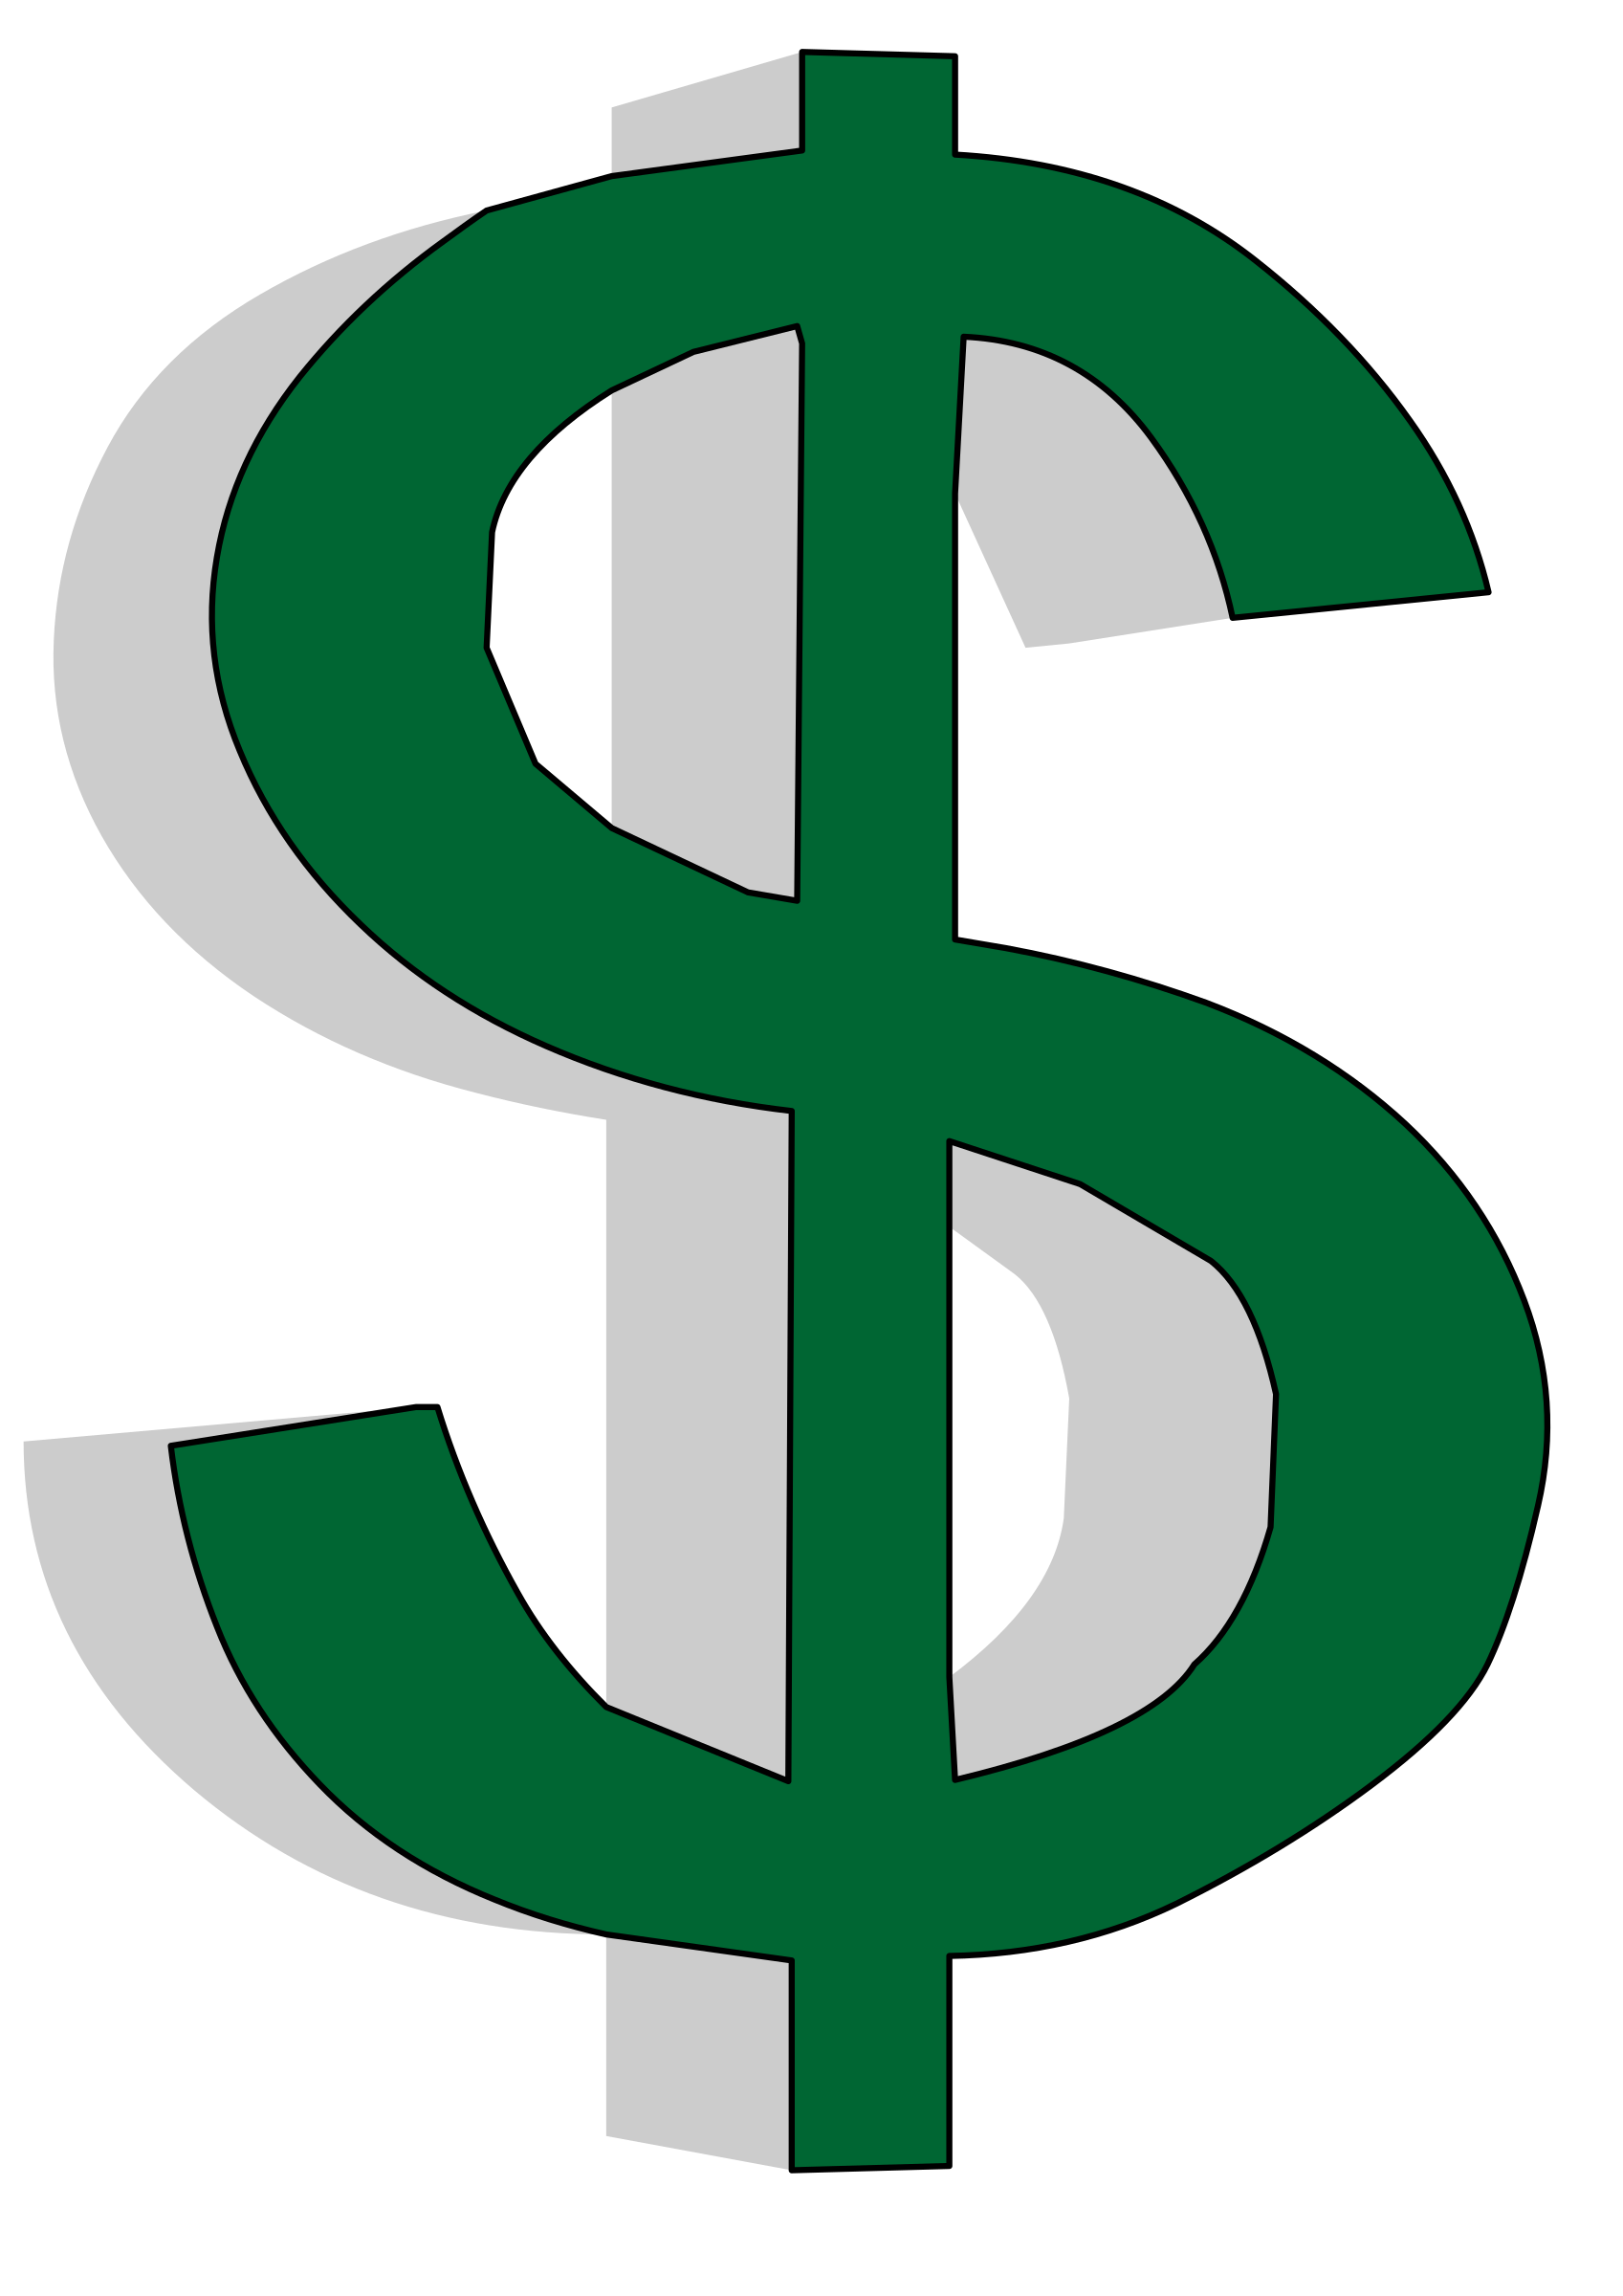 Clipart - Dollar symbol in 3D